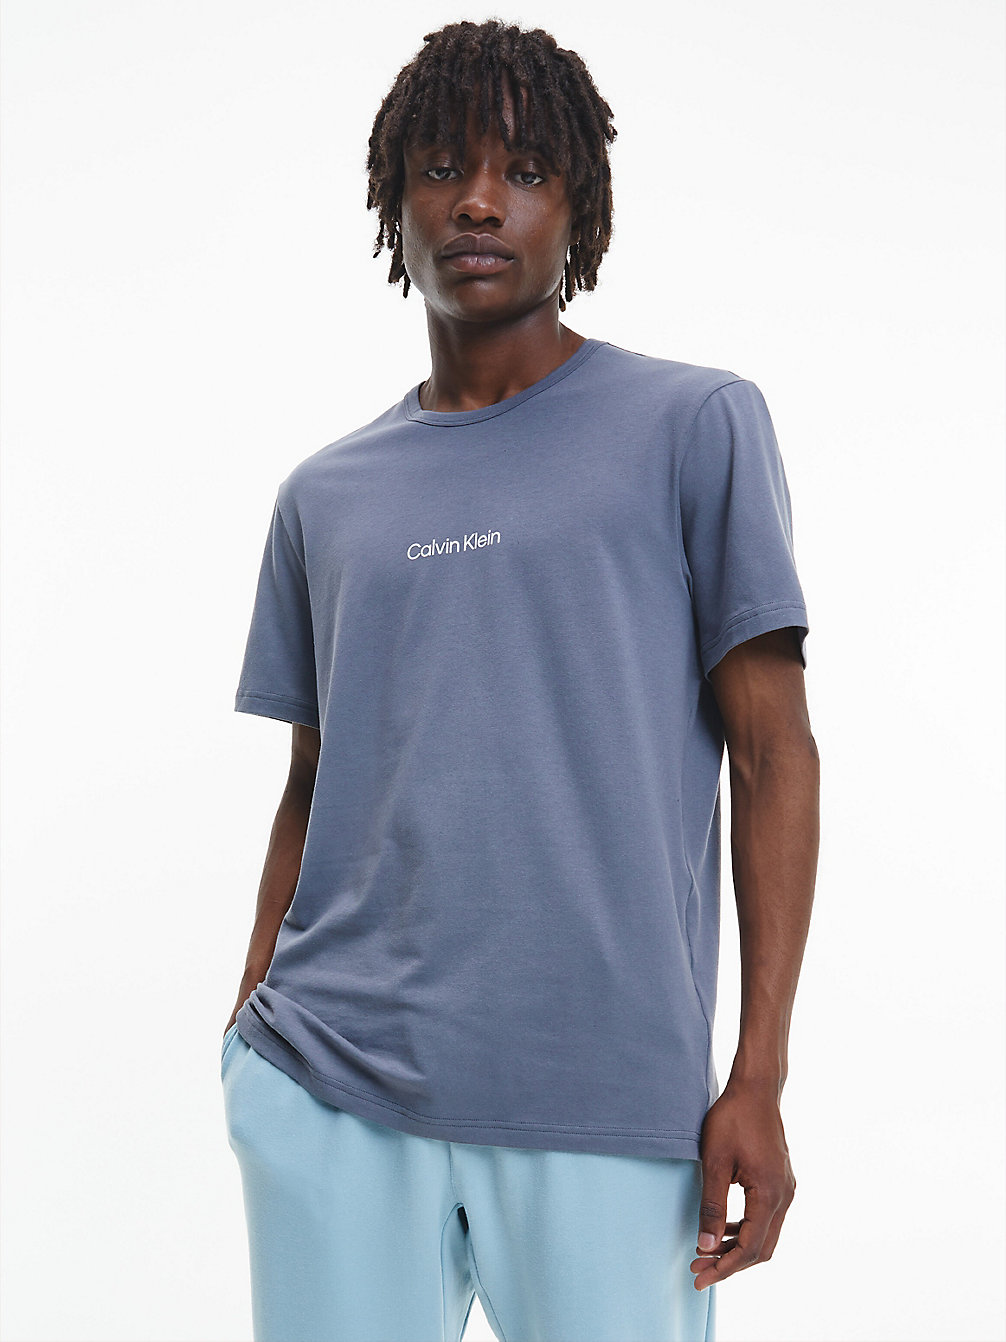 SLEEK GREY T-Shirt D'intérieur - Modern Structure undefined hommes Calvin Klein